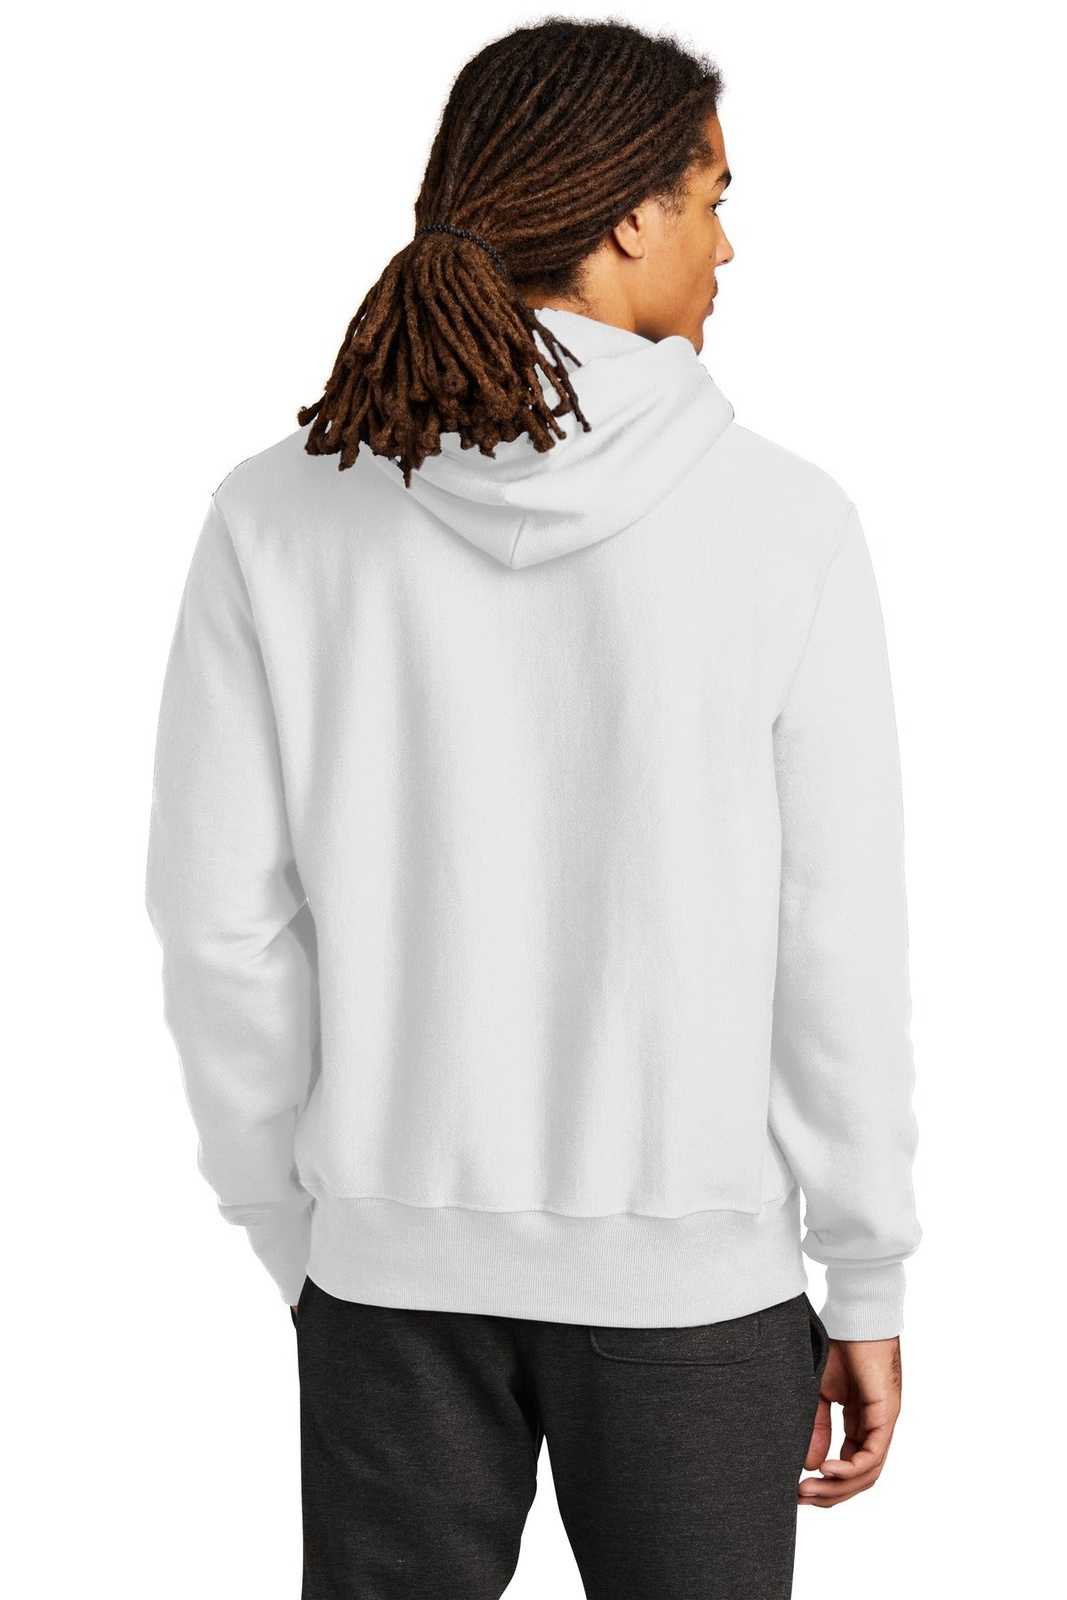 Champion S101 Reverse Weave Hooded Sweatshirt - White